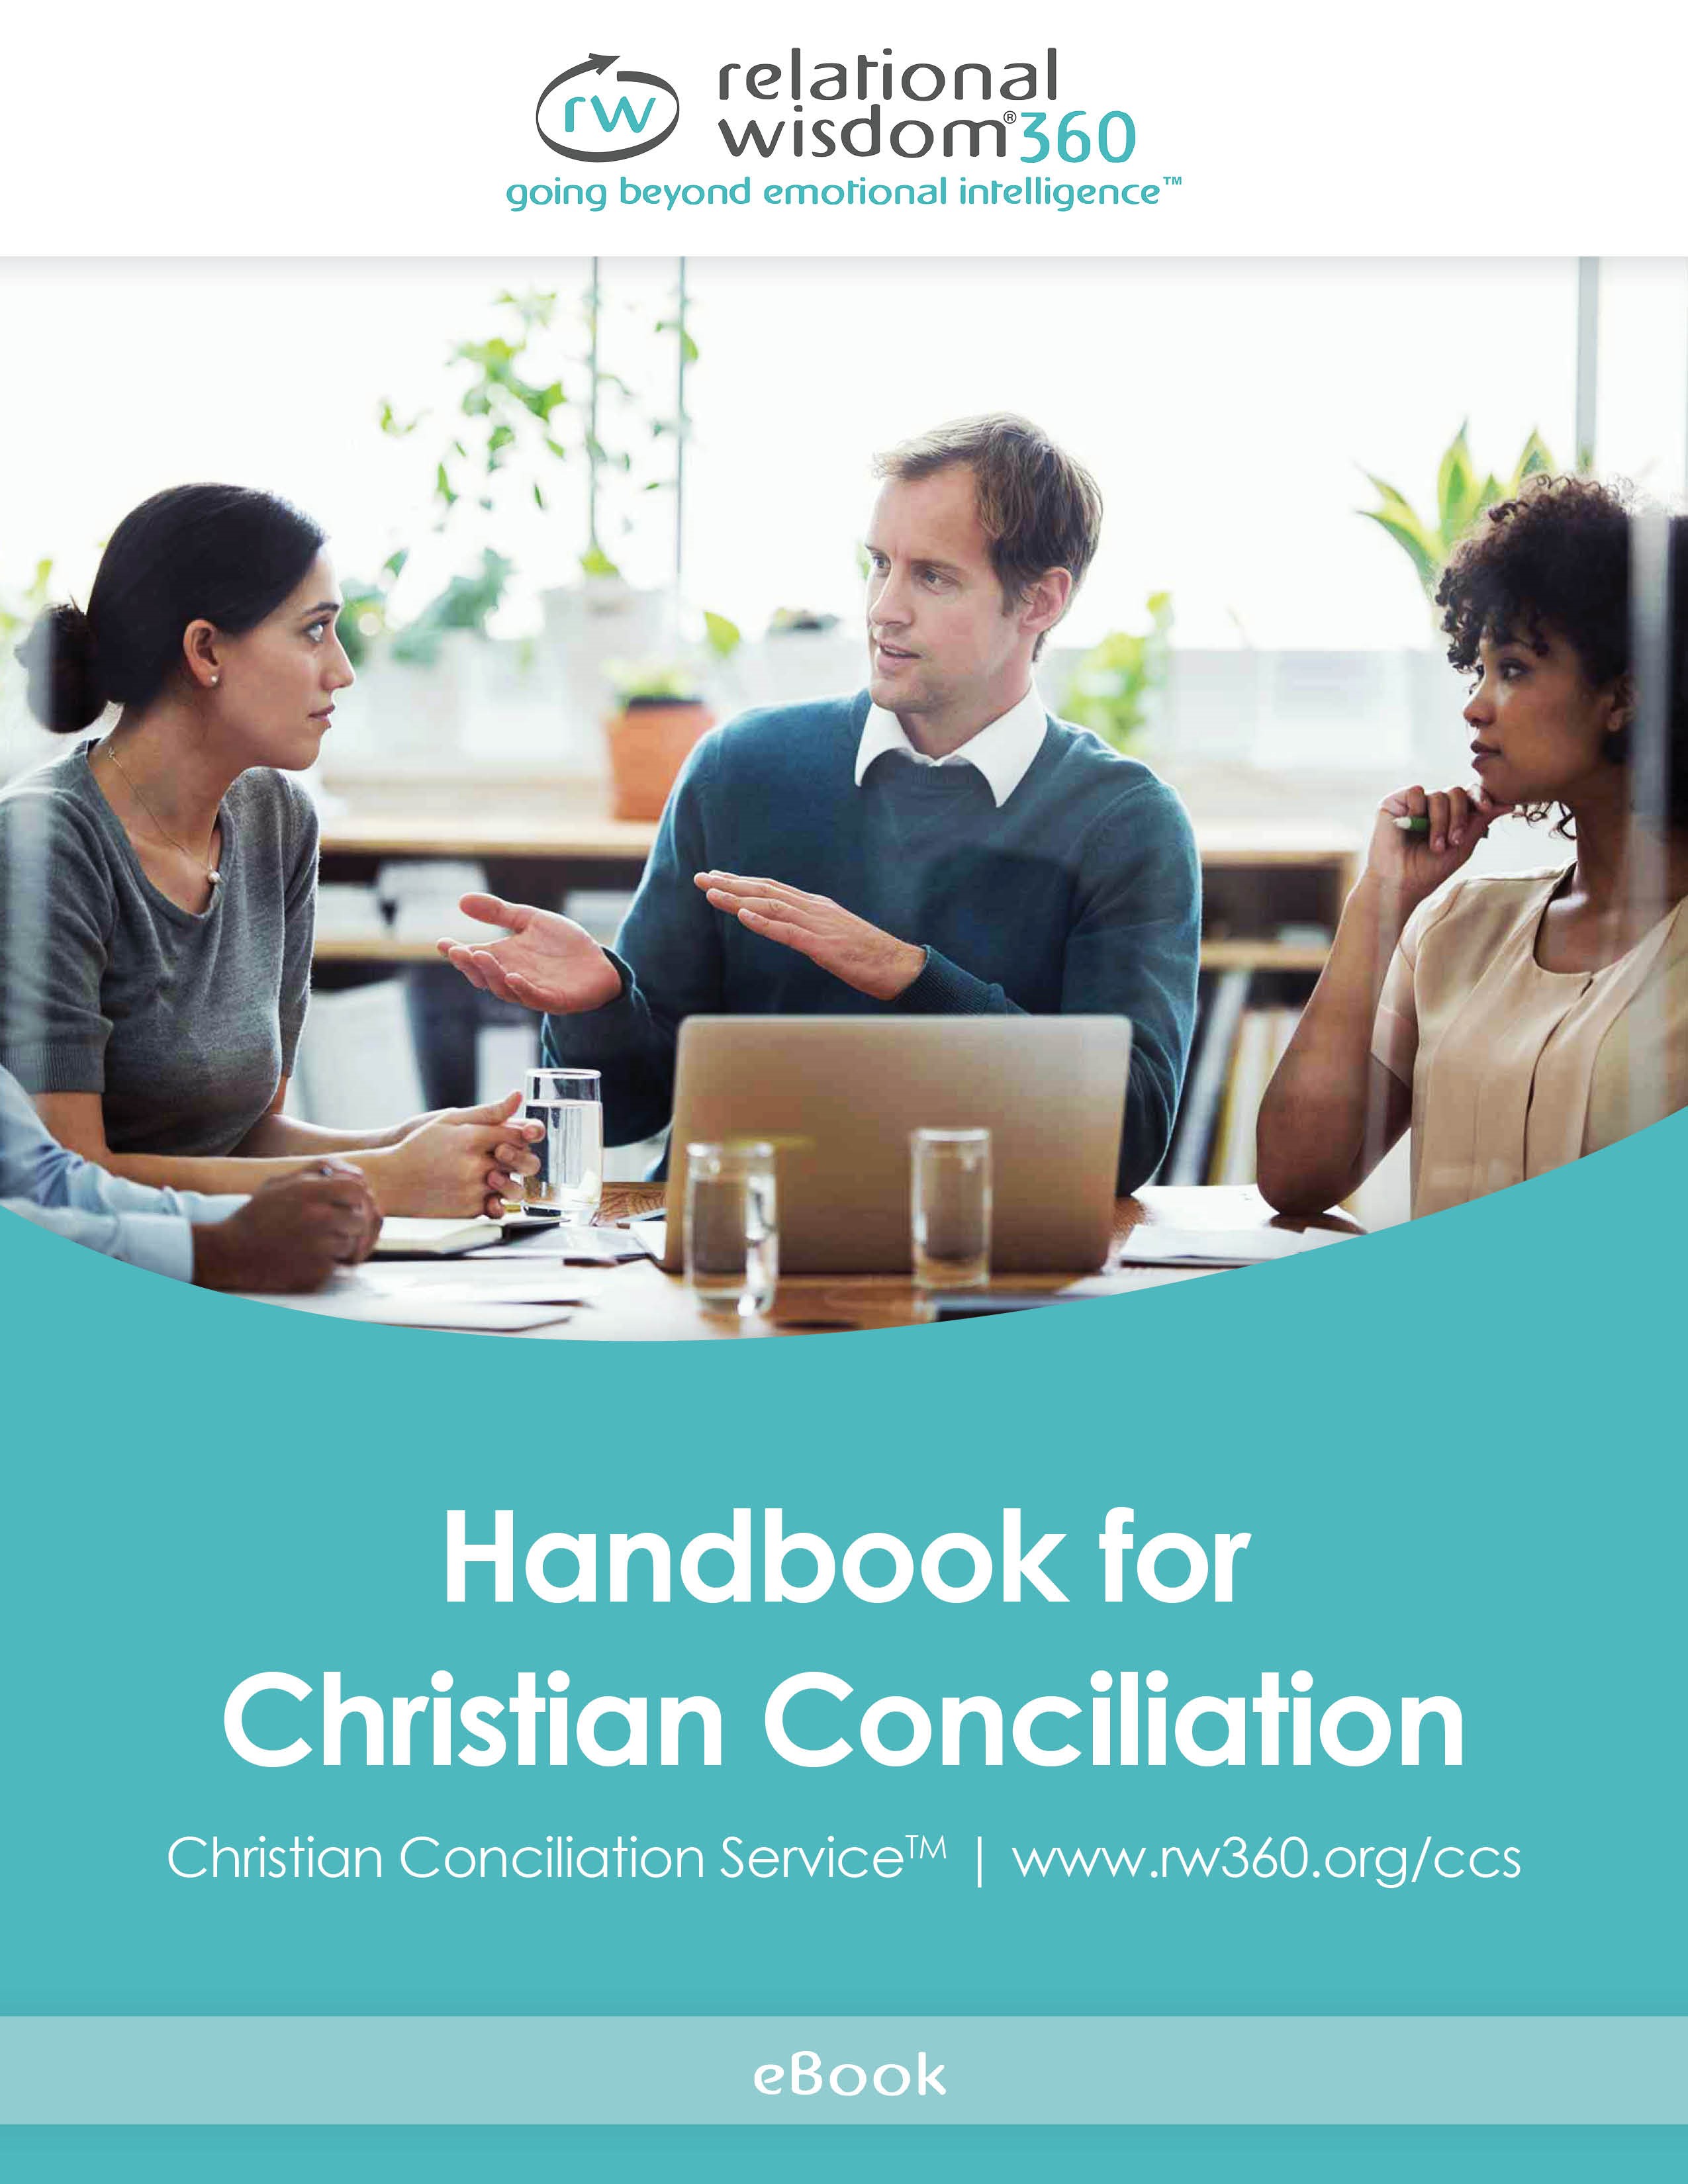 Handbook for Christian Conciliation - Introduction to Christian Conciliation